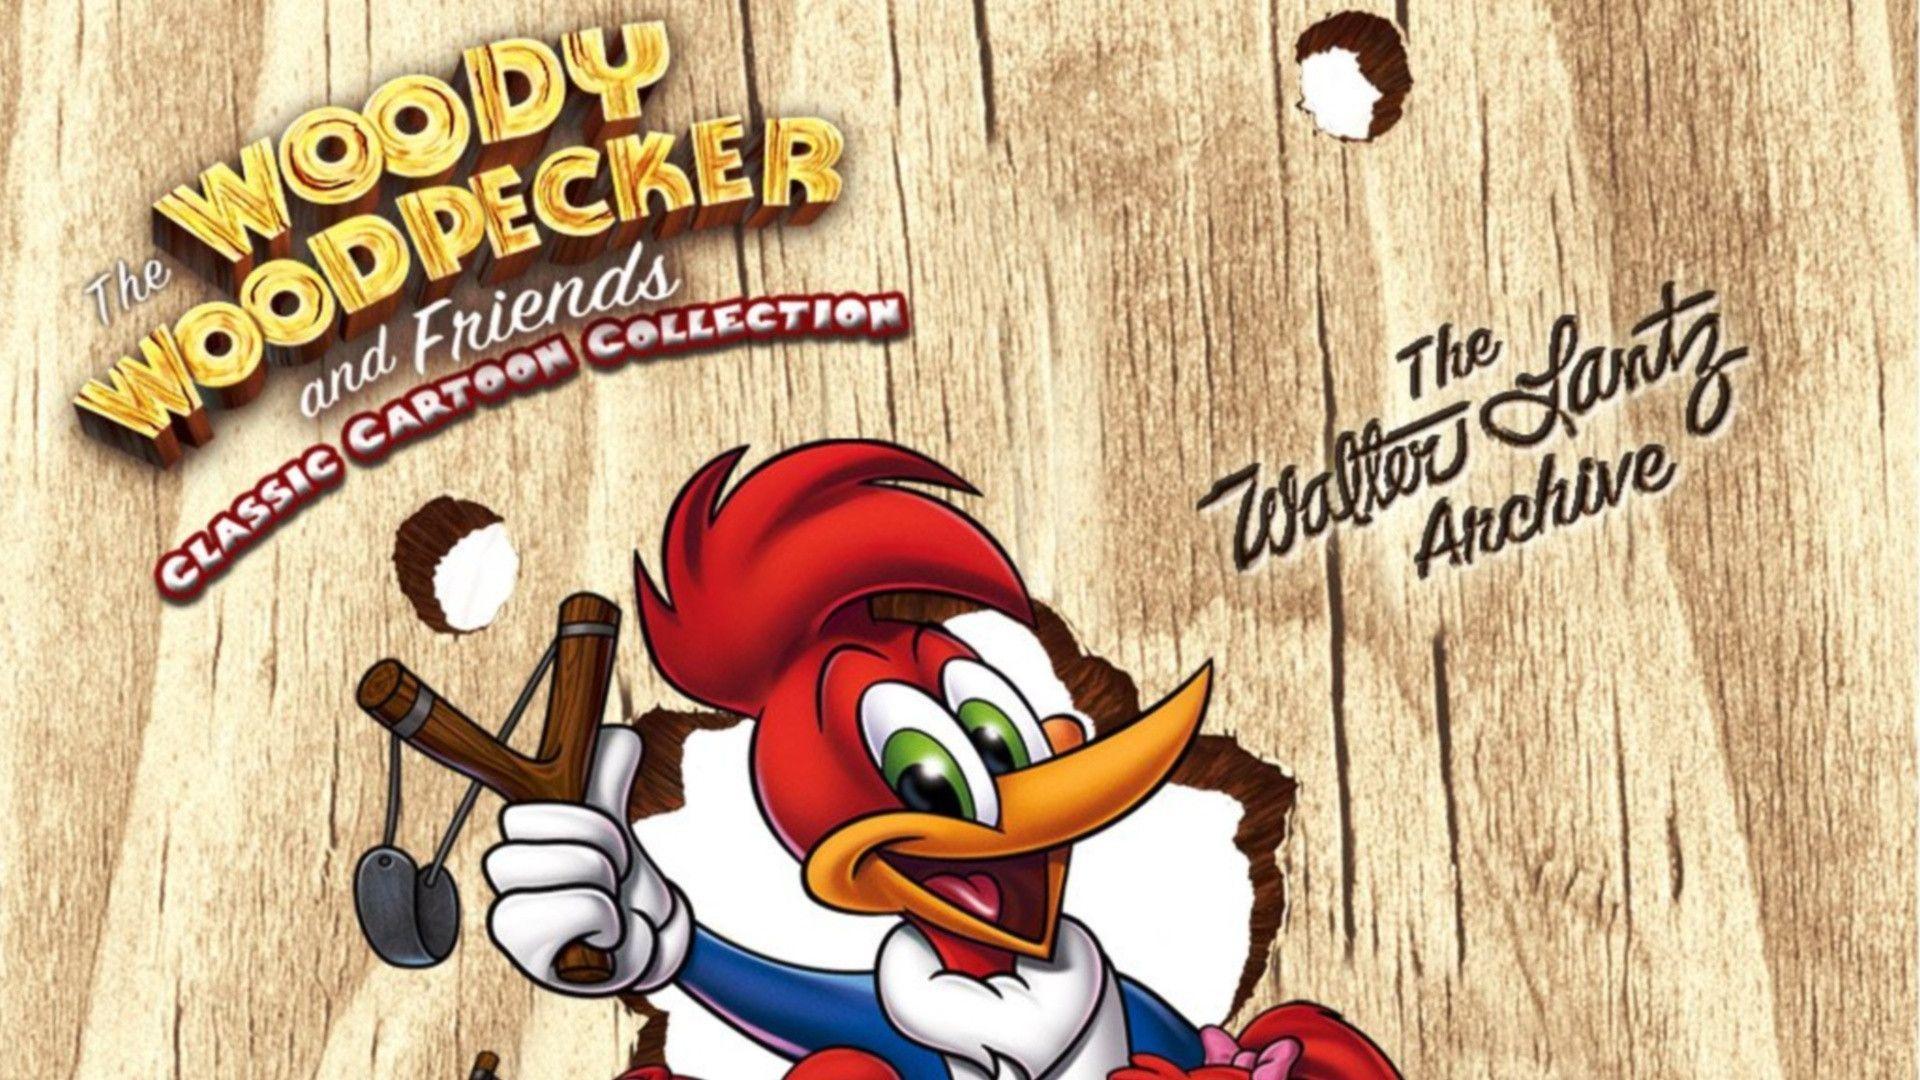 Top Galery Woody Woodpecker Download